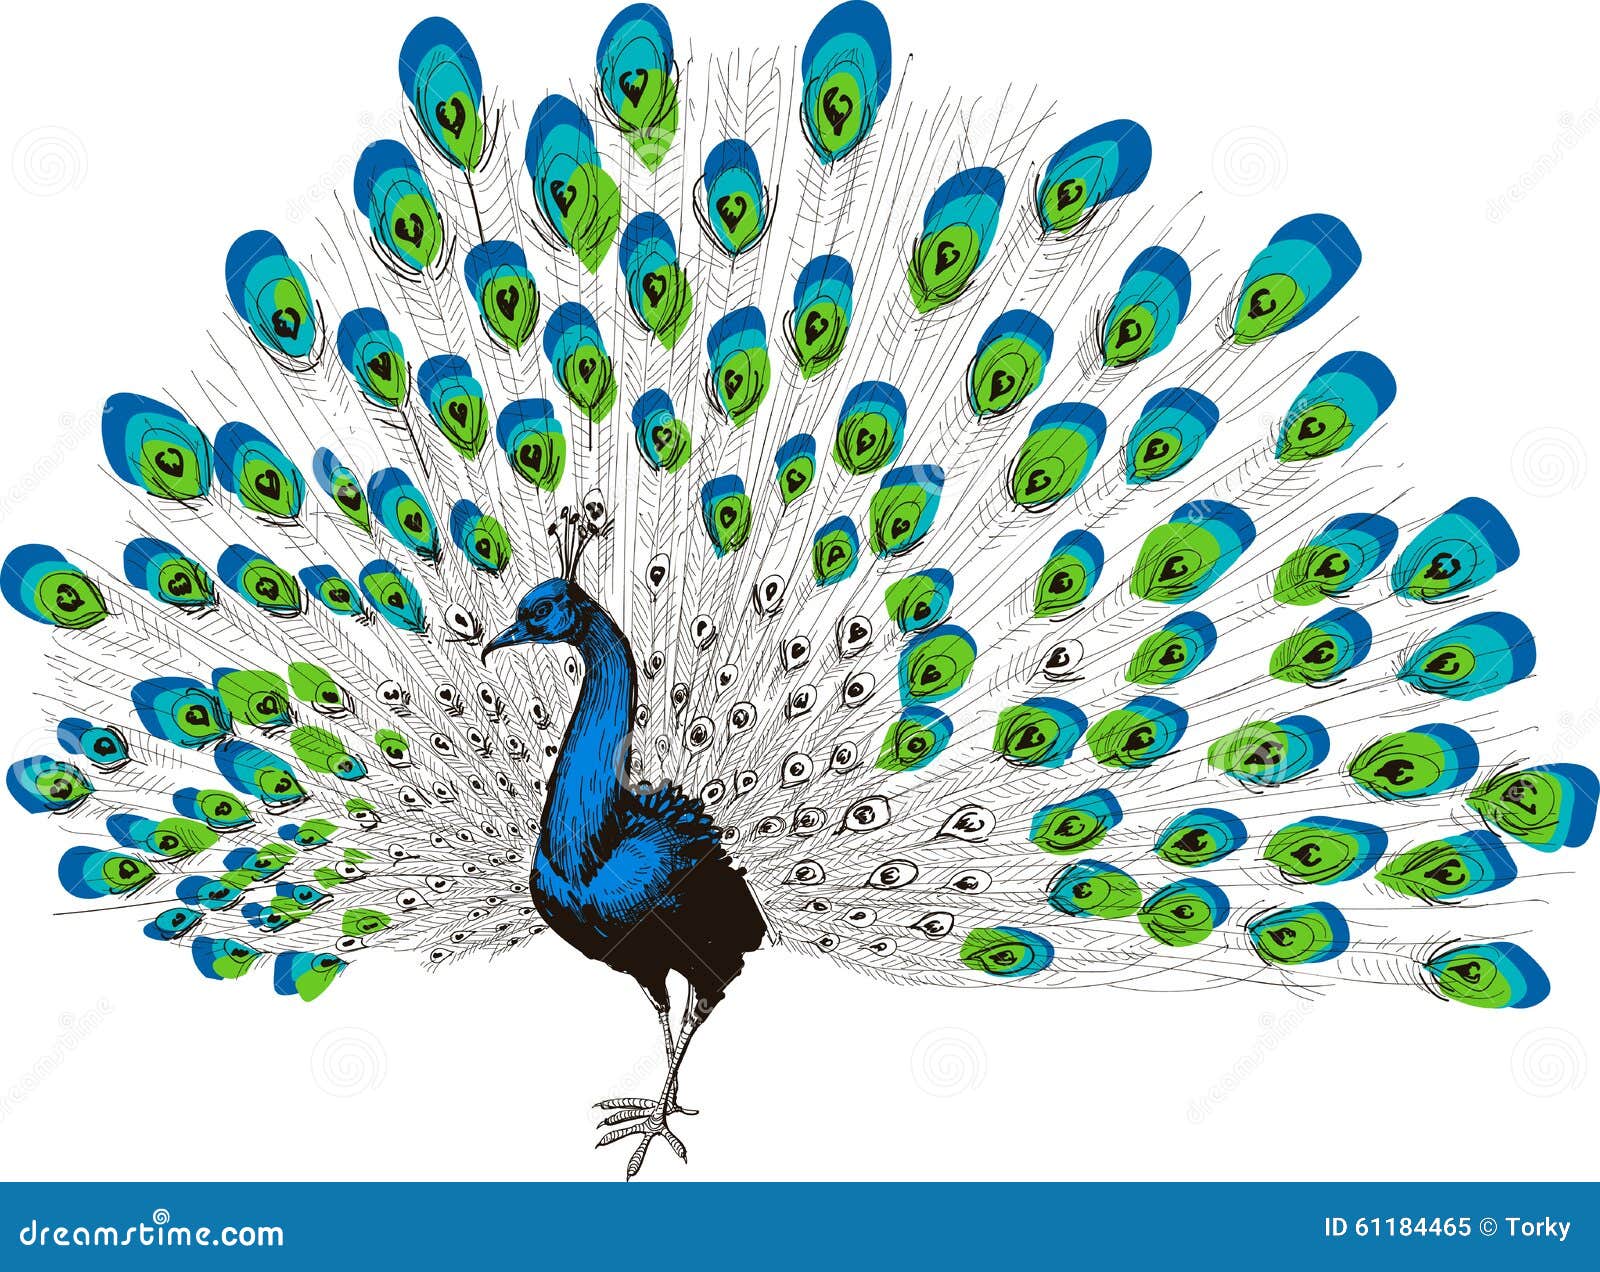 Aggregate more than 140 dancing peacock drawing best